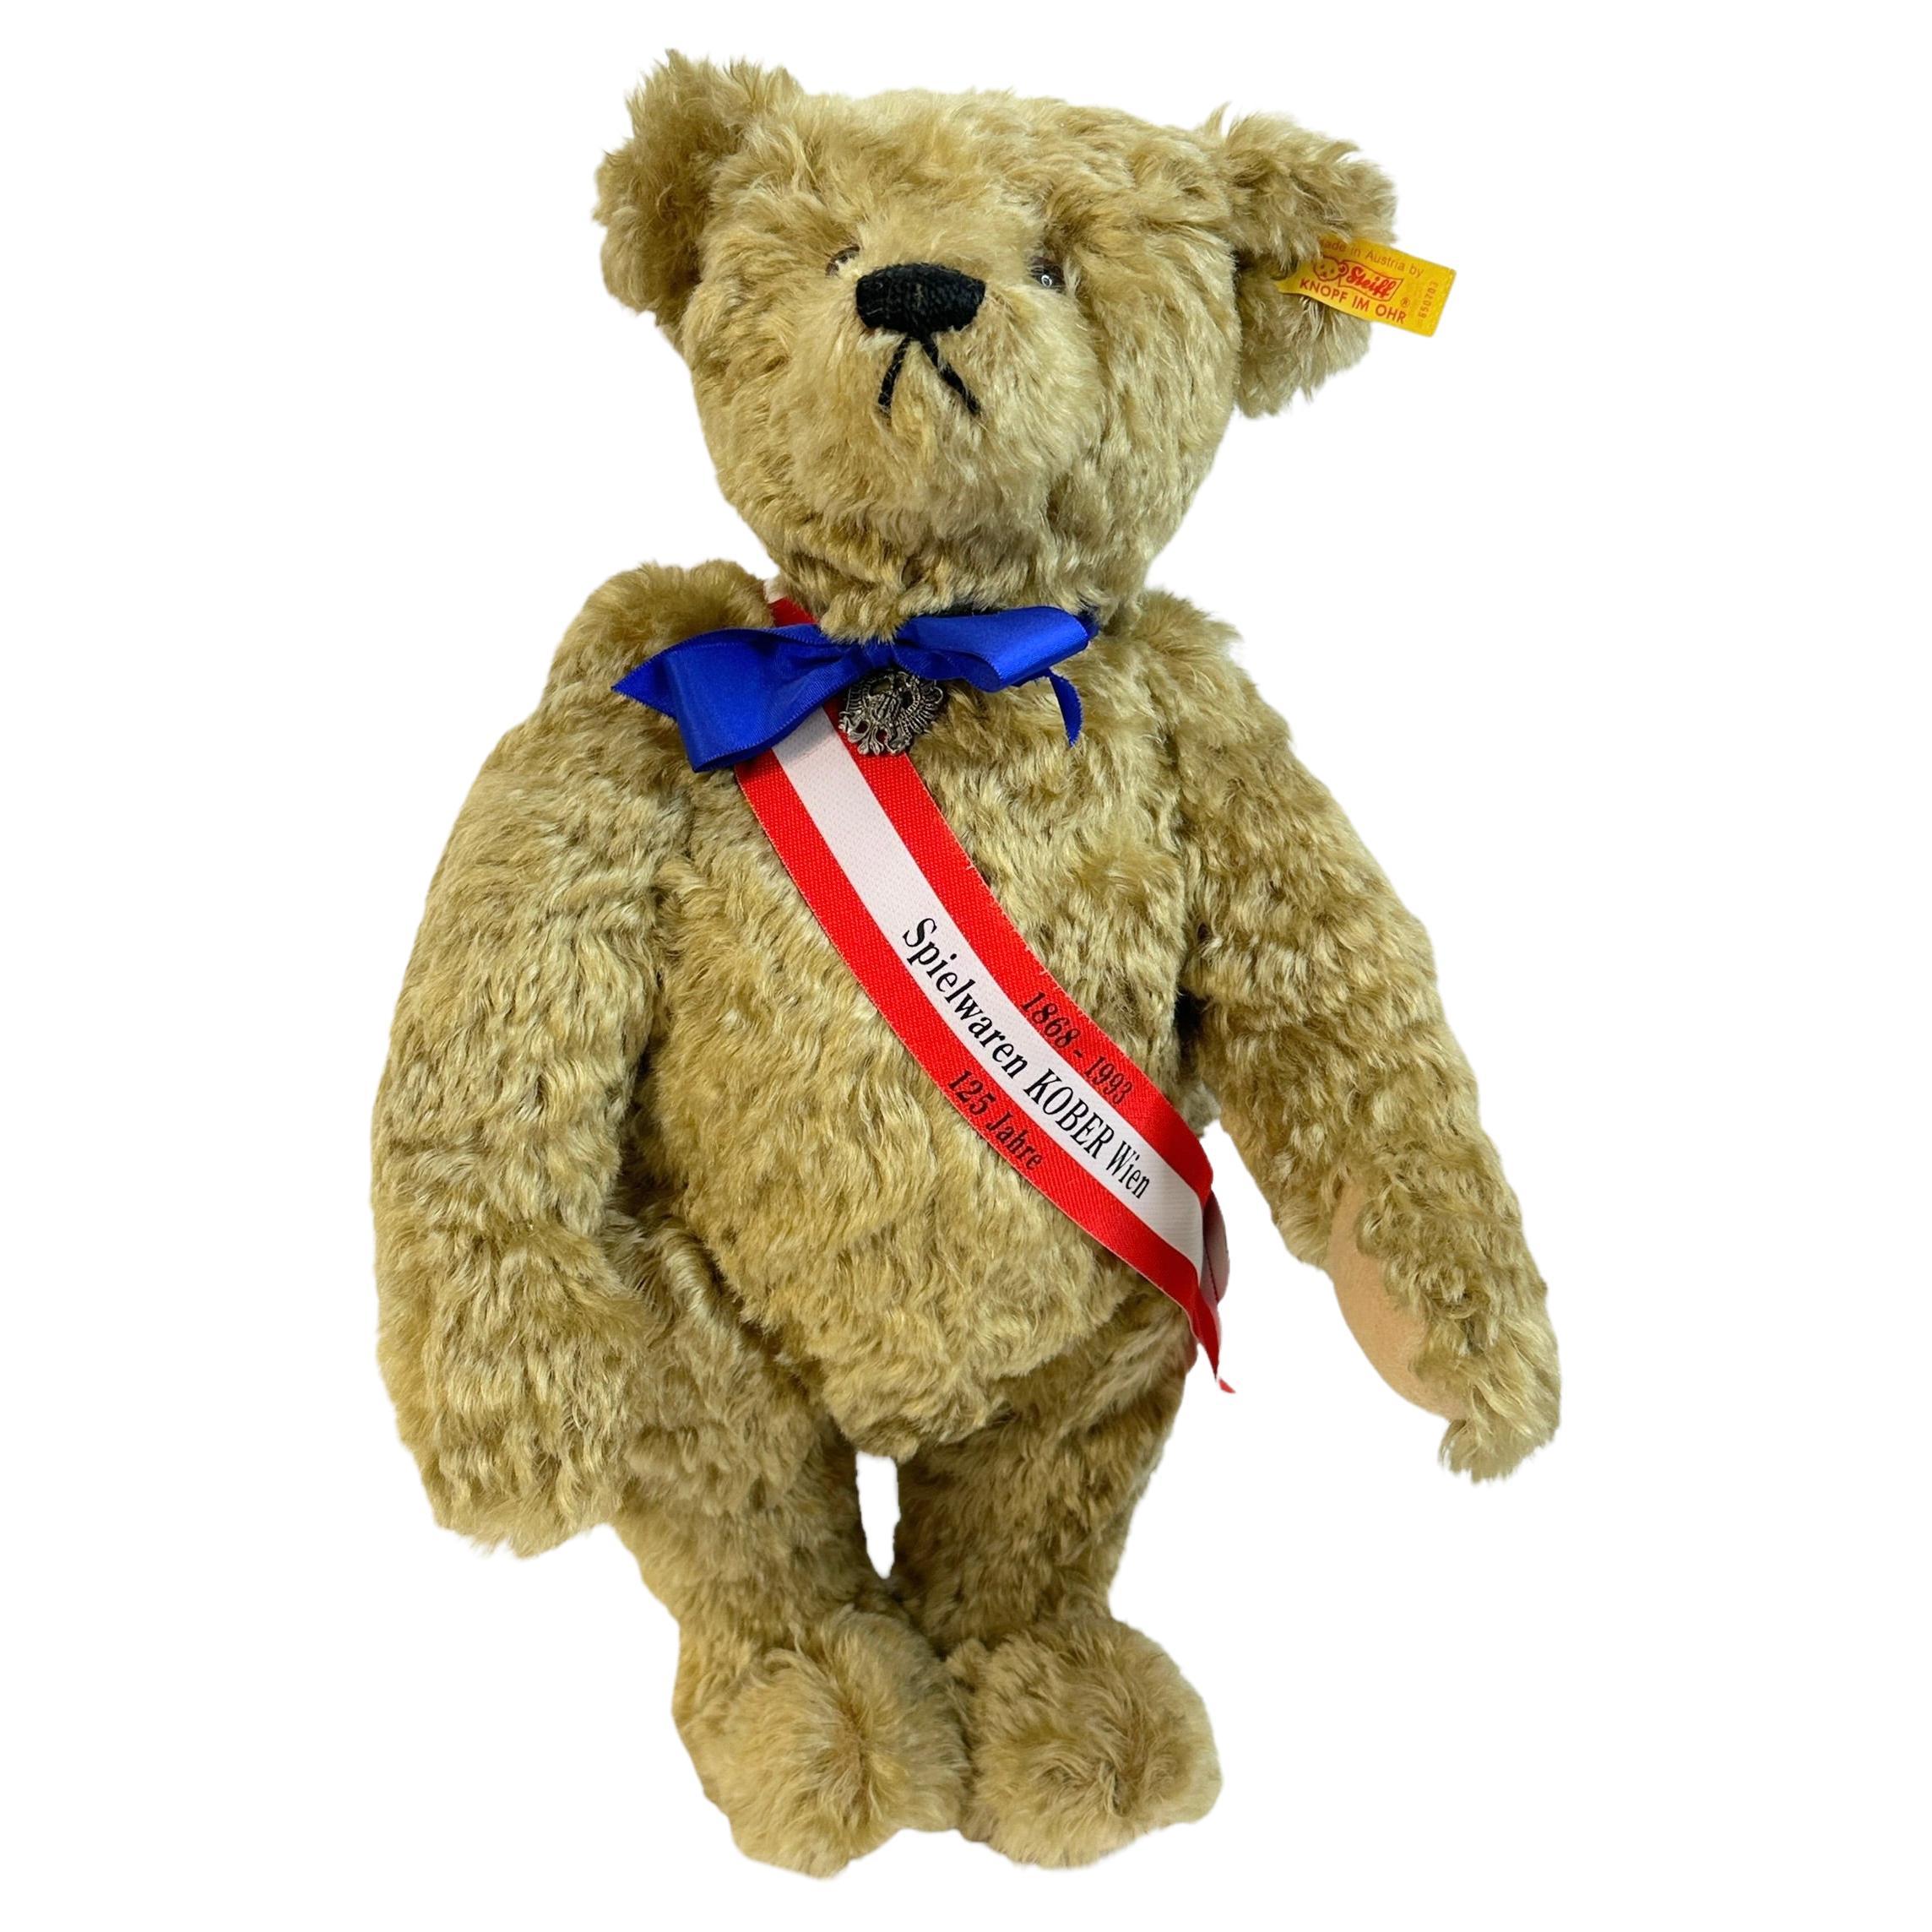 Steiff Collectible Teddy Bear Toy Store Kober Vienna exclusive, Vintage Austria For Sale